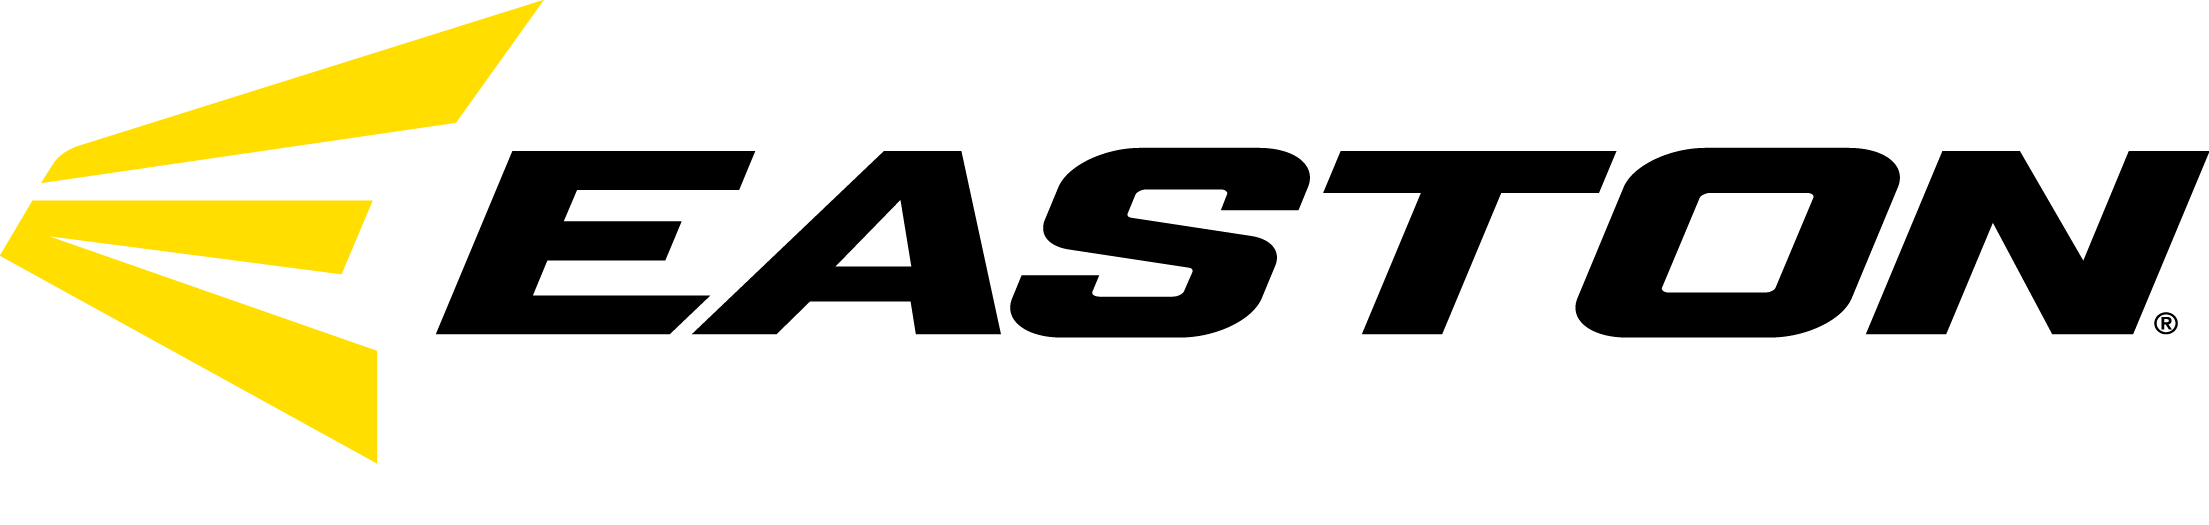 New Easton Logo - New-Easton-Logo - Boutique Hockey Agency - KO Sports